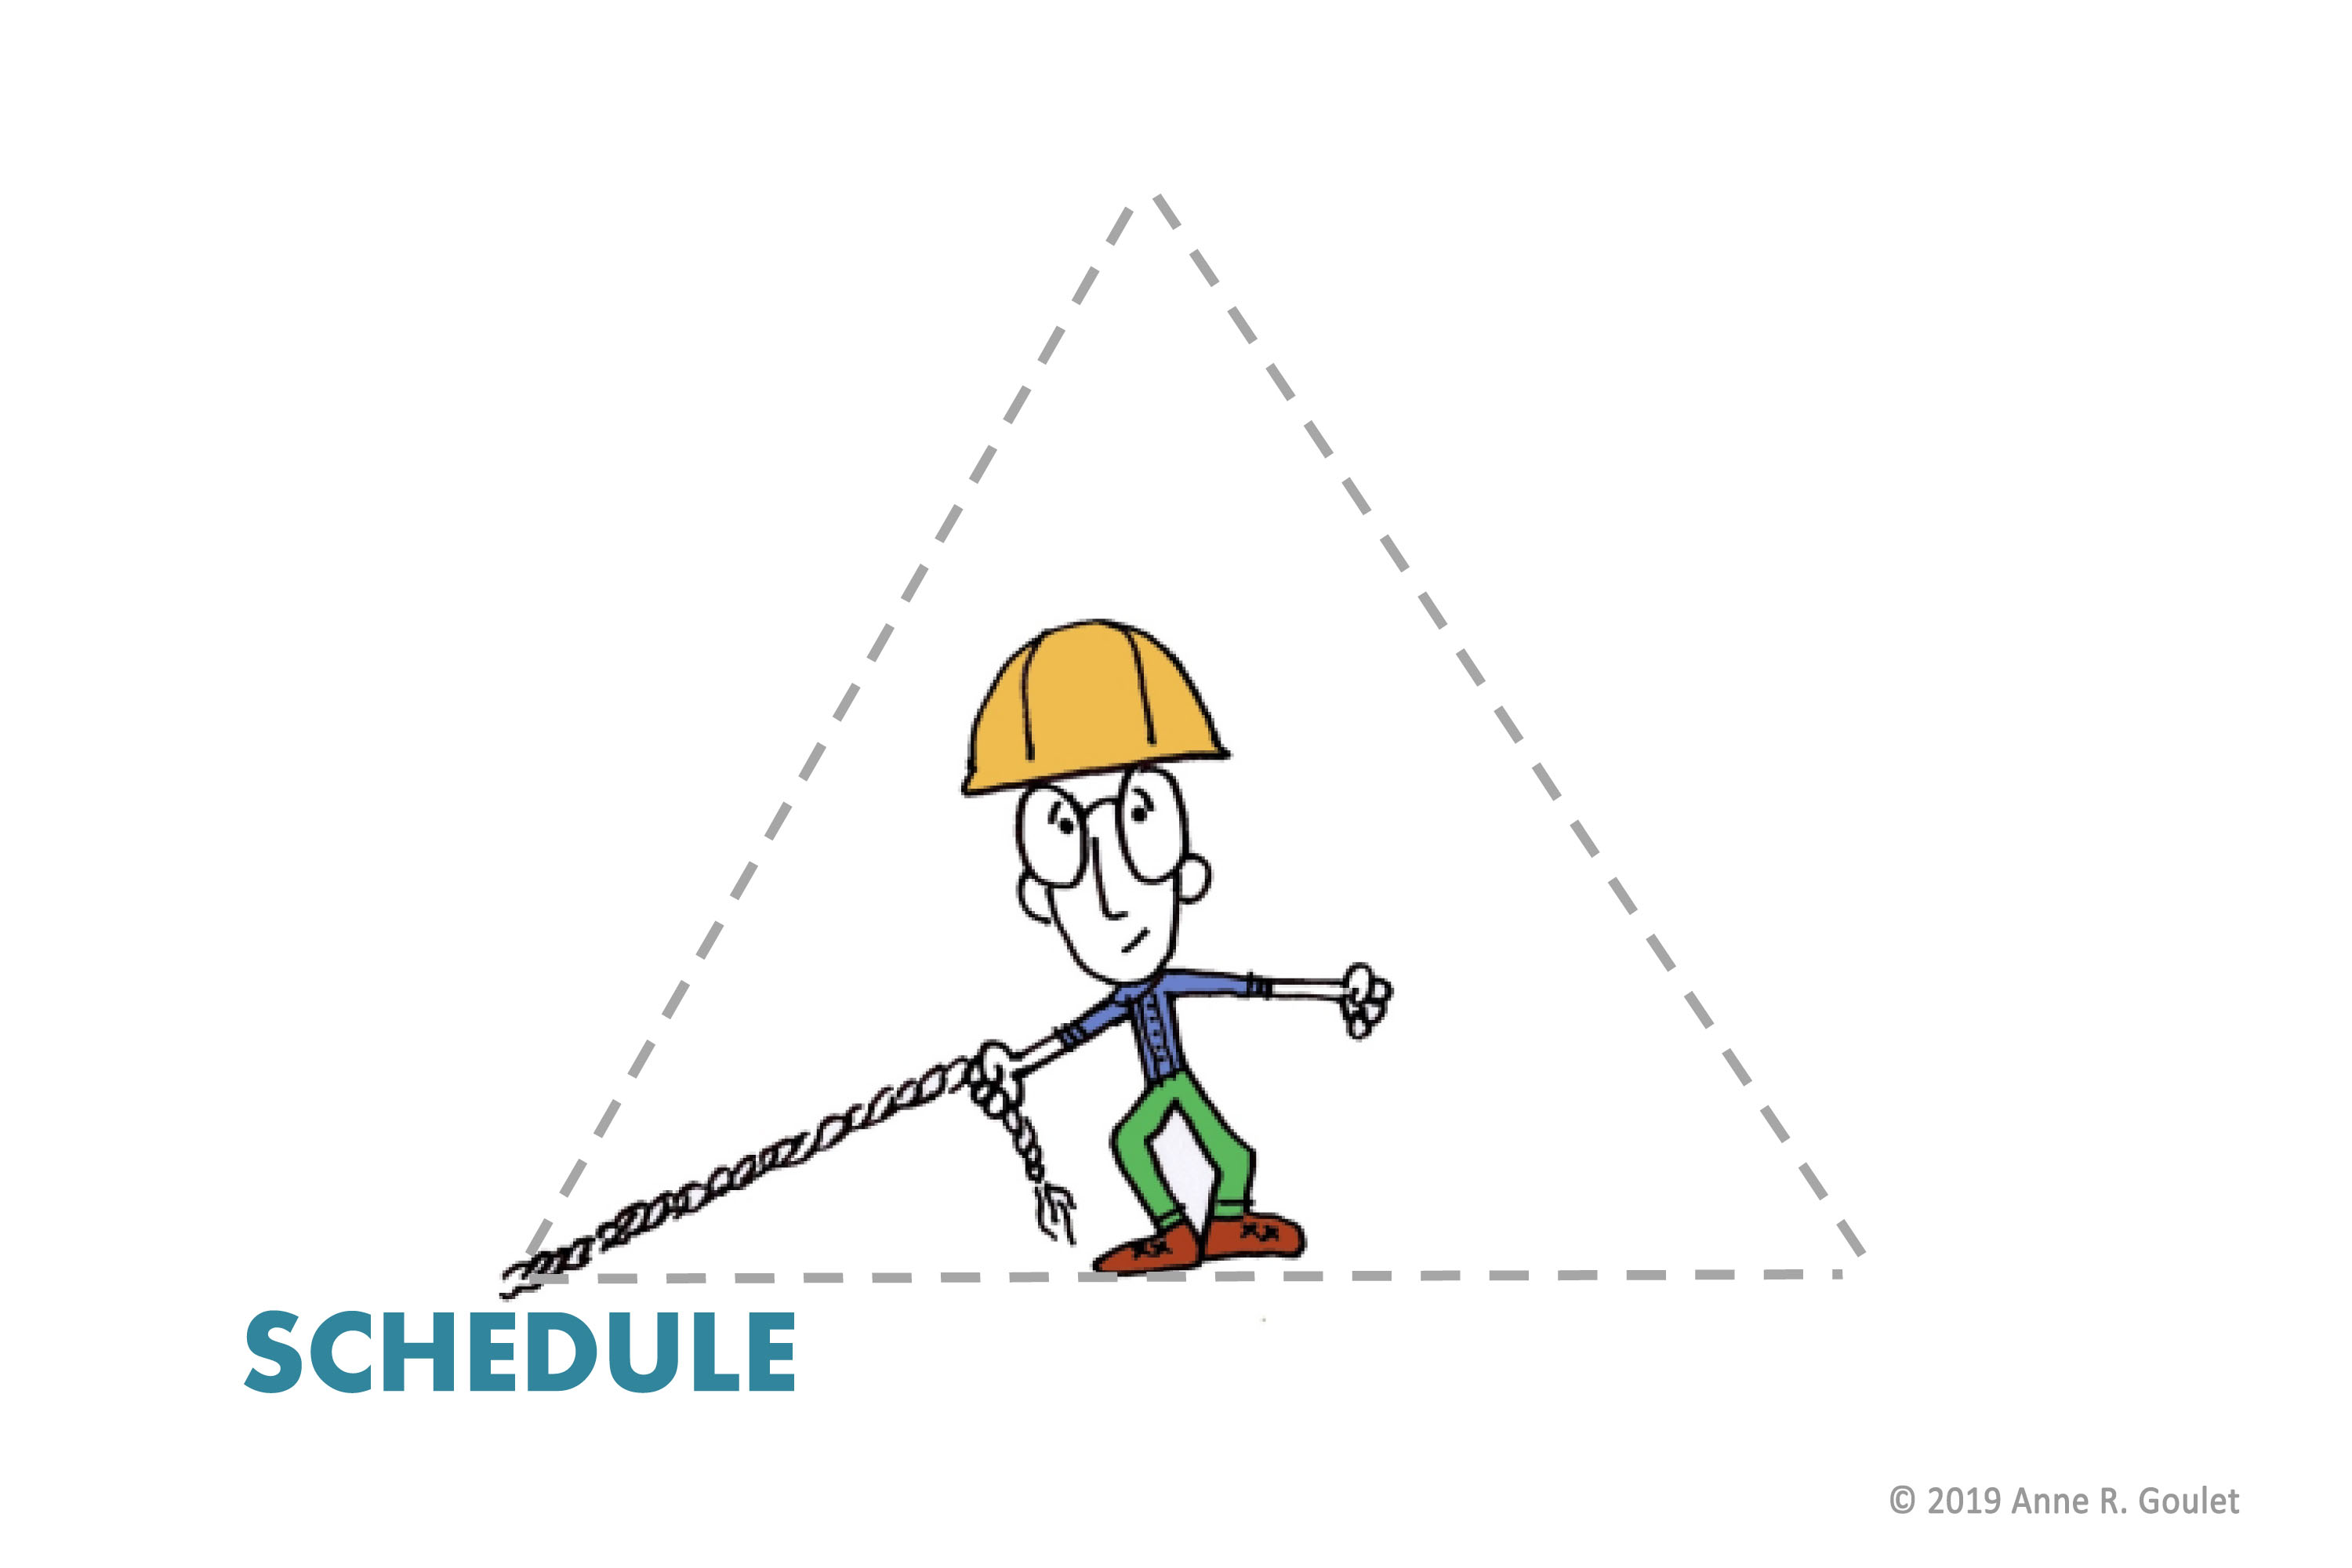 The classic Scope, Schedule, and Budget Triangle: Schedule